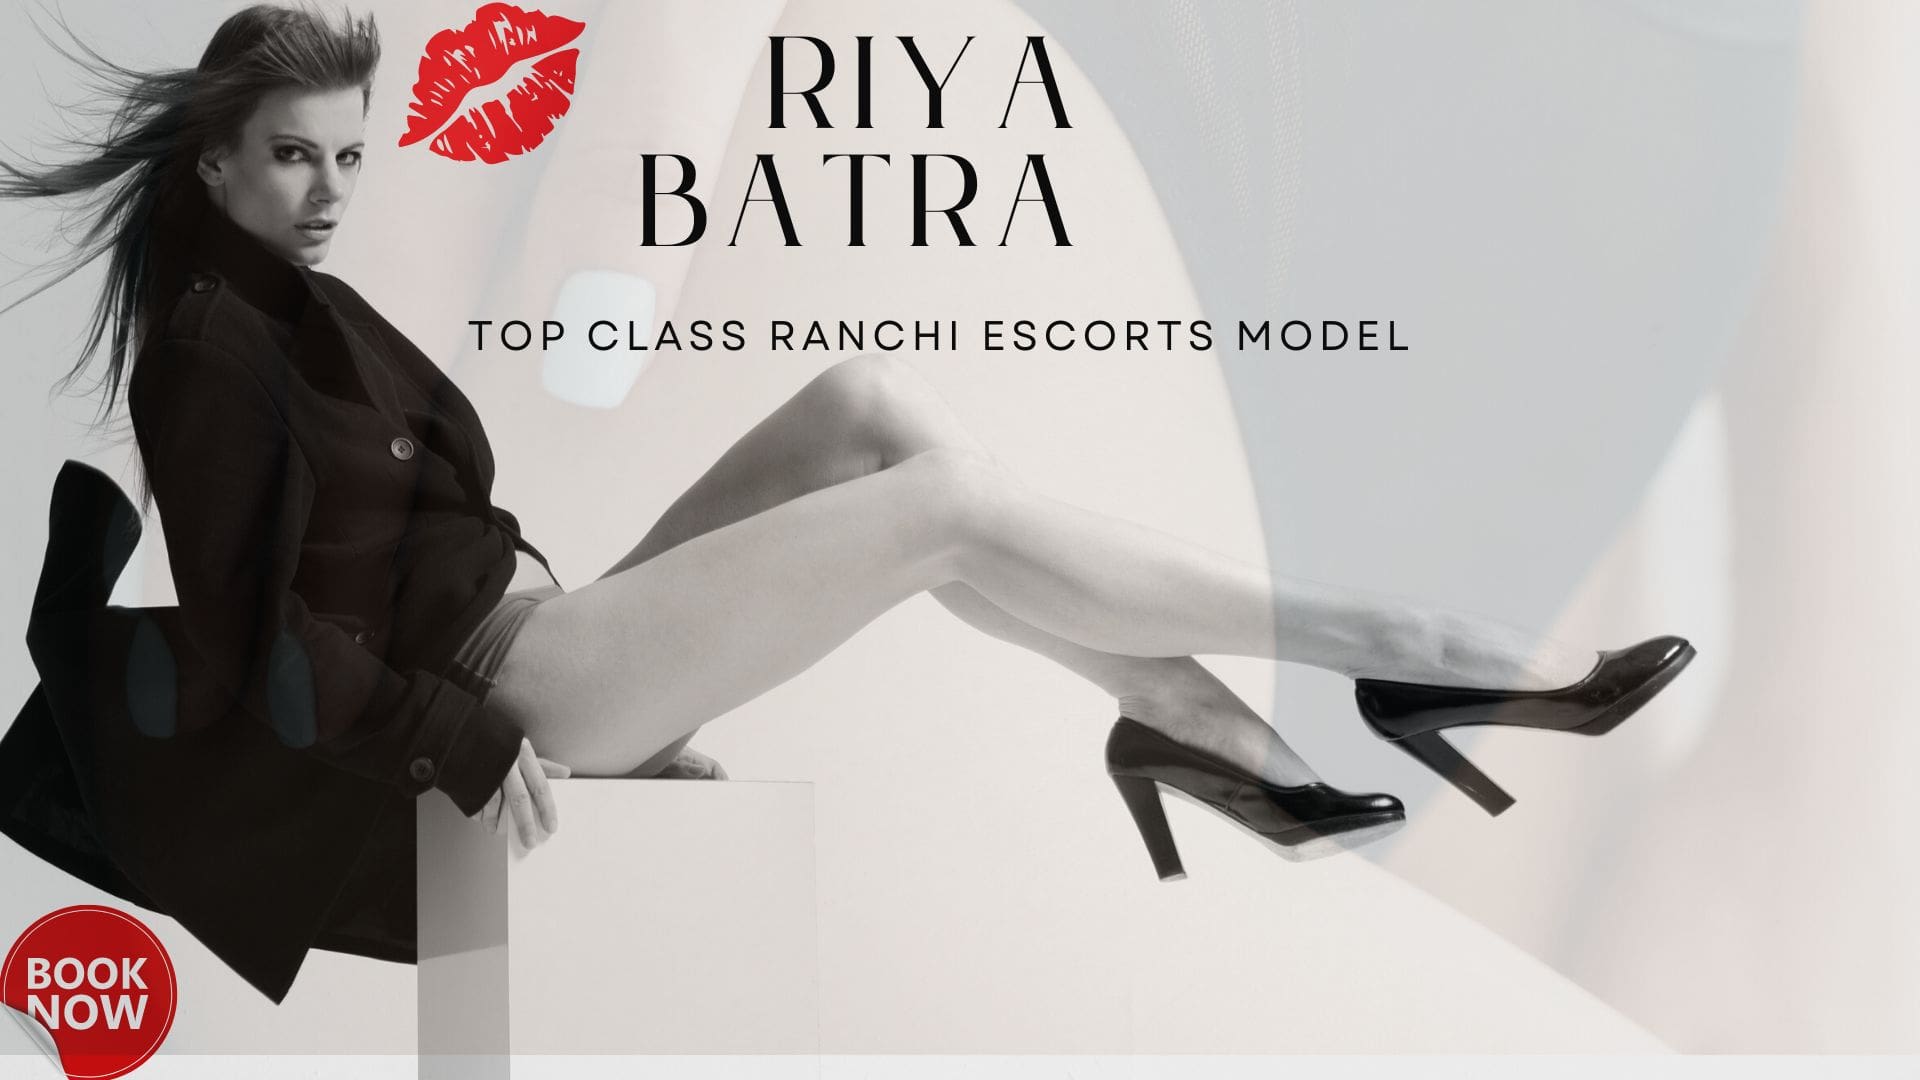 Ranchi escorts | Hire Sexy Ranchi escorts service at Your Hotel Room